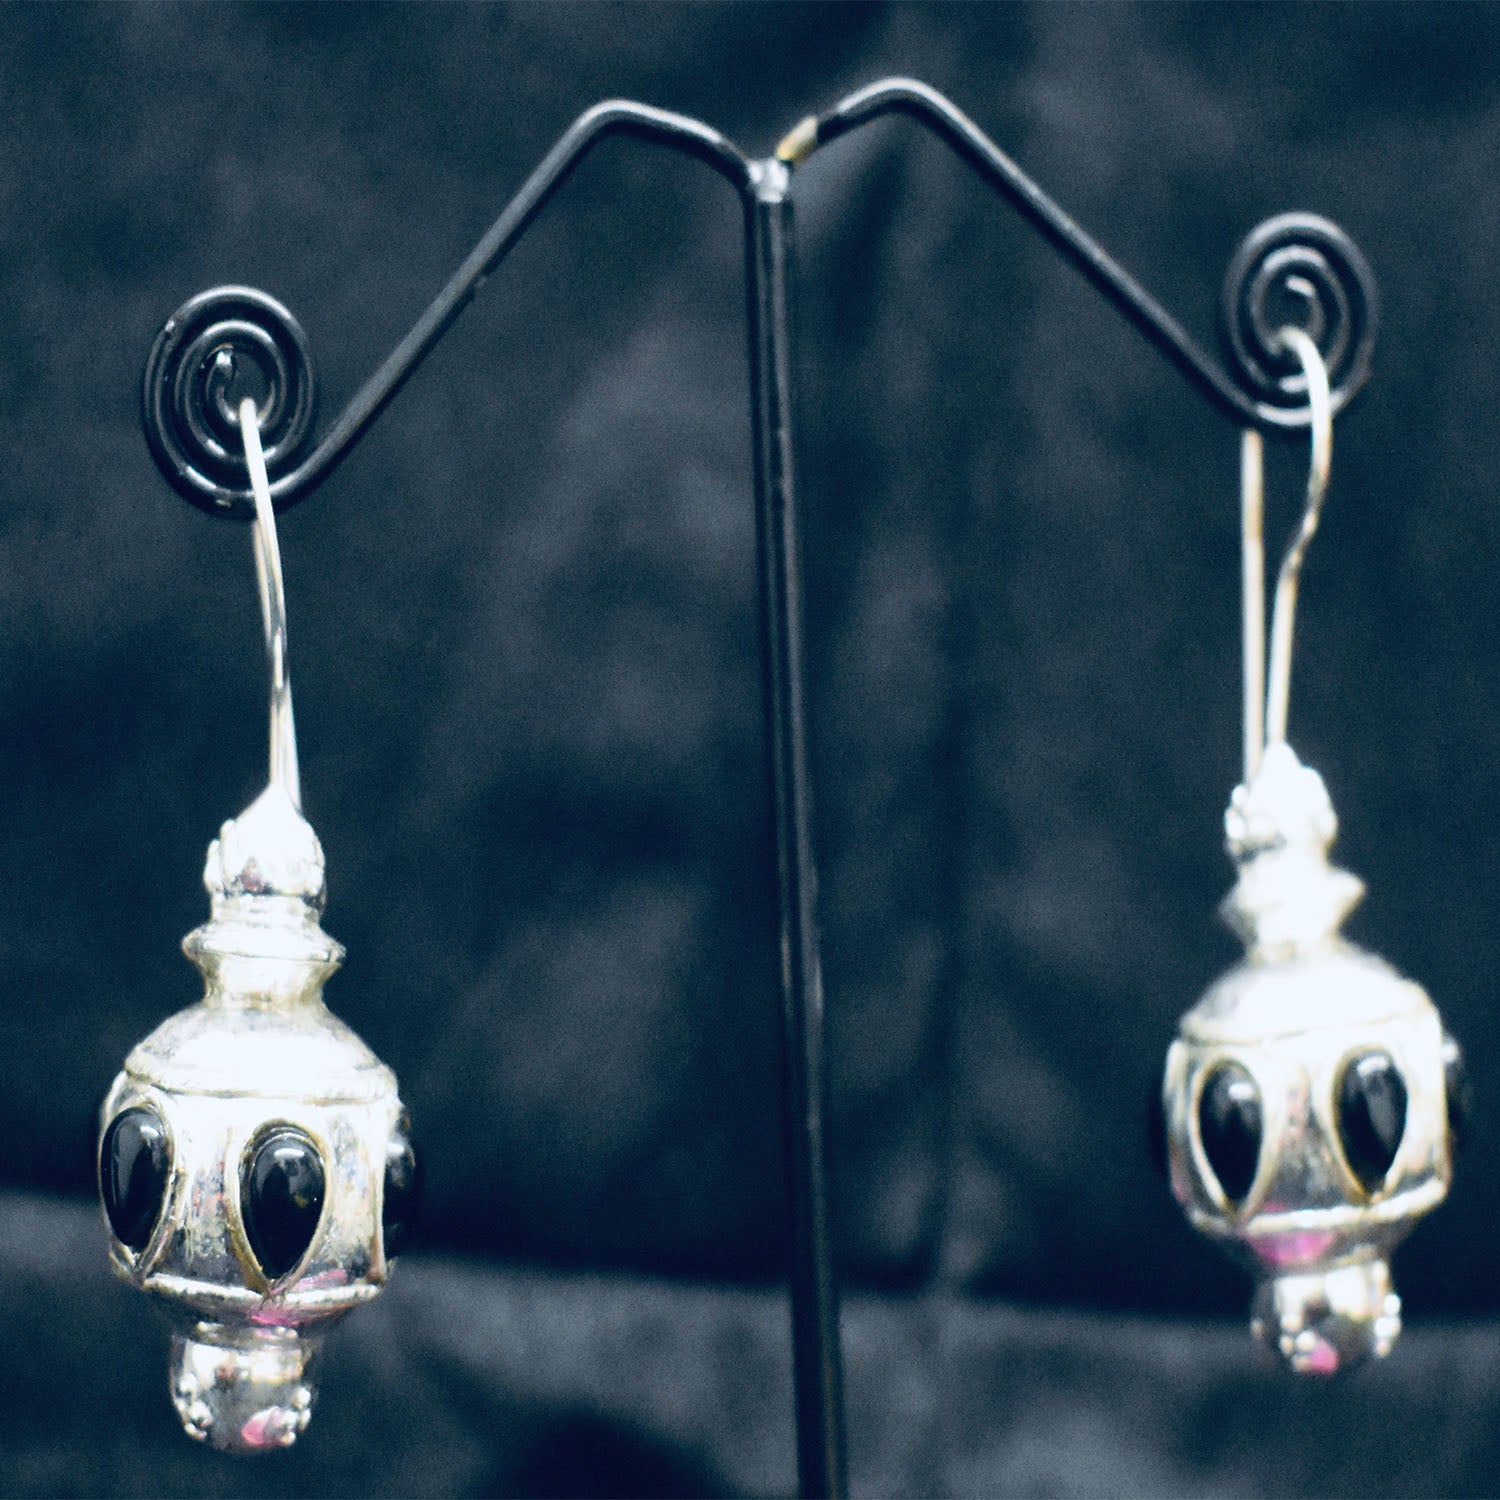 Ganesha Handicrafts Chunky Indian Onyx Earrings, Earrings, Indian Earrings, Chunky Earrings, Trend Earrings, Onyx Earrings, Chunky Indian Earrings, Black Stone earrings, Silver with Black Earrings